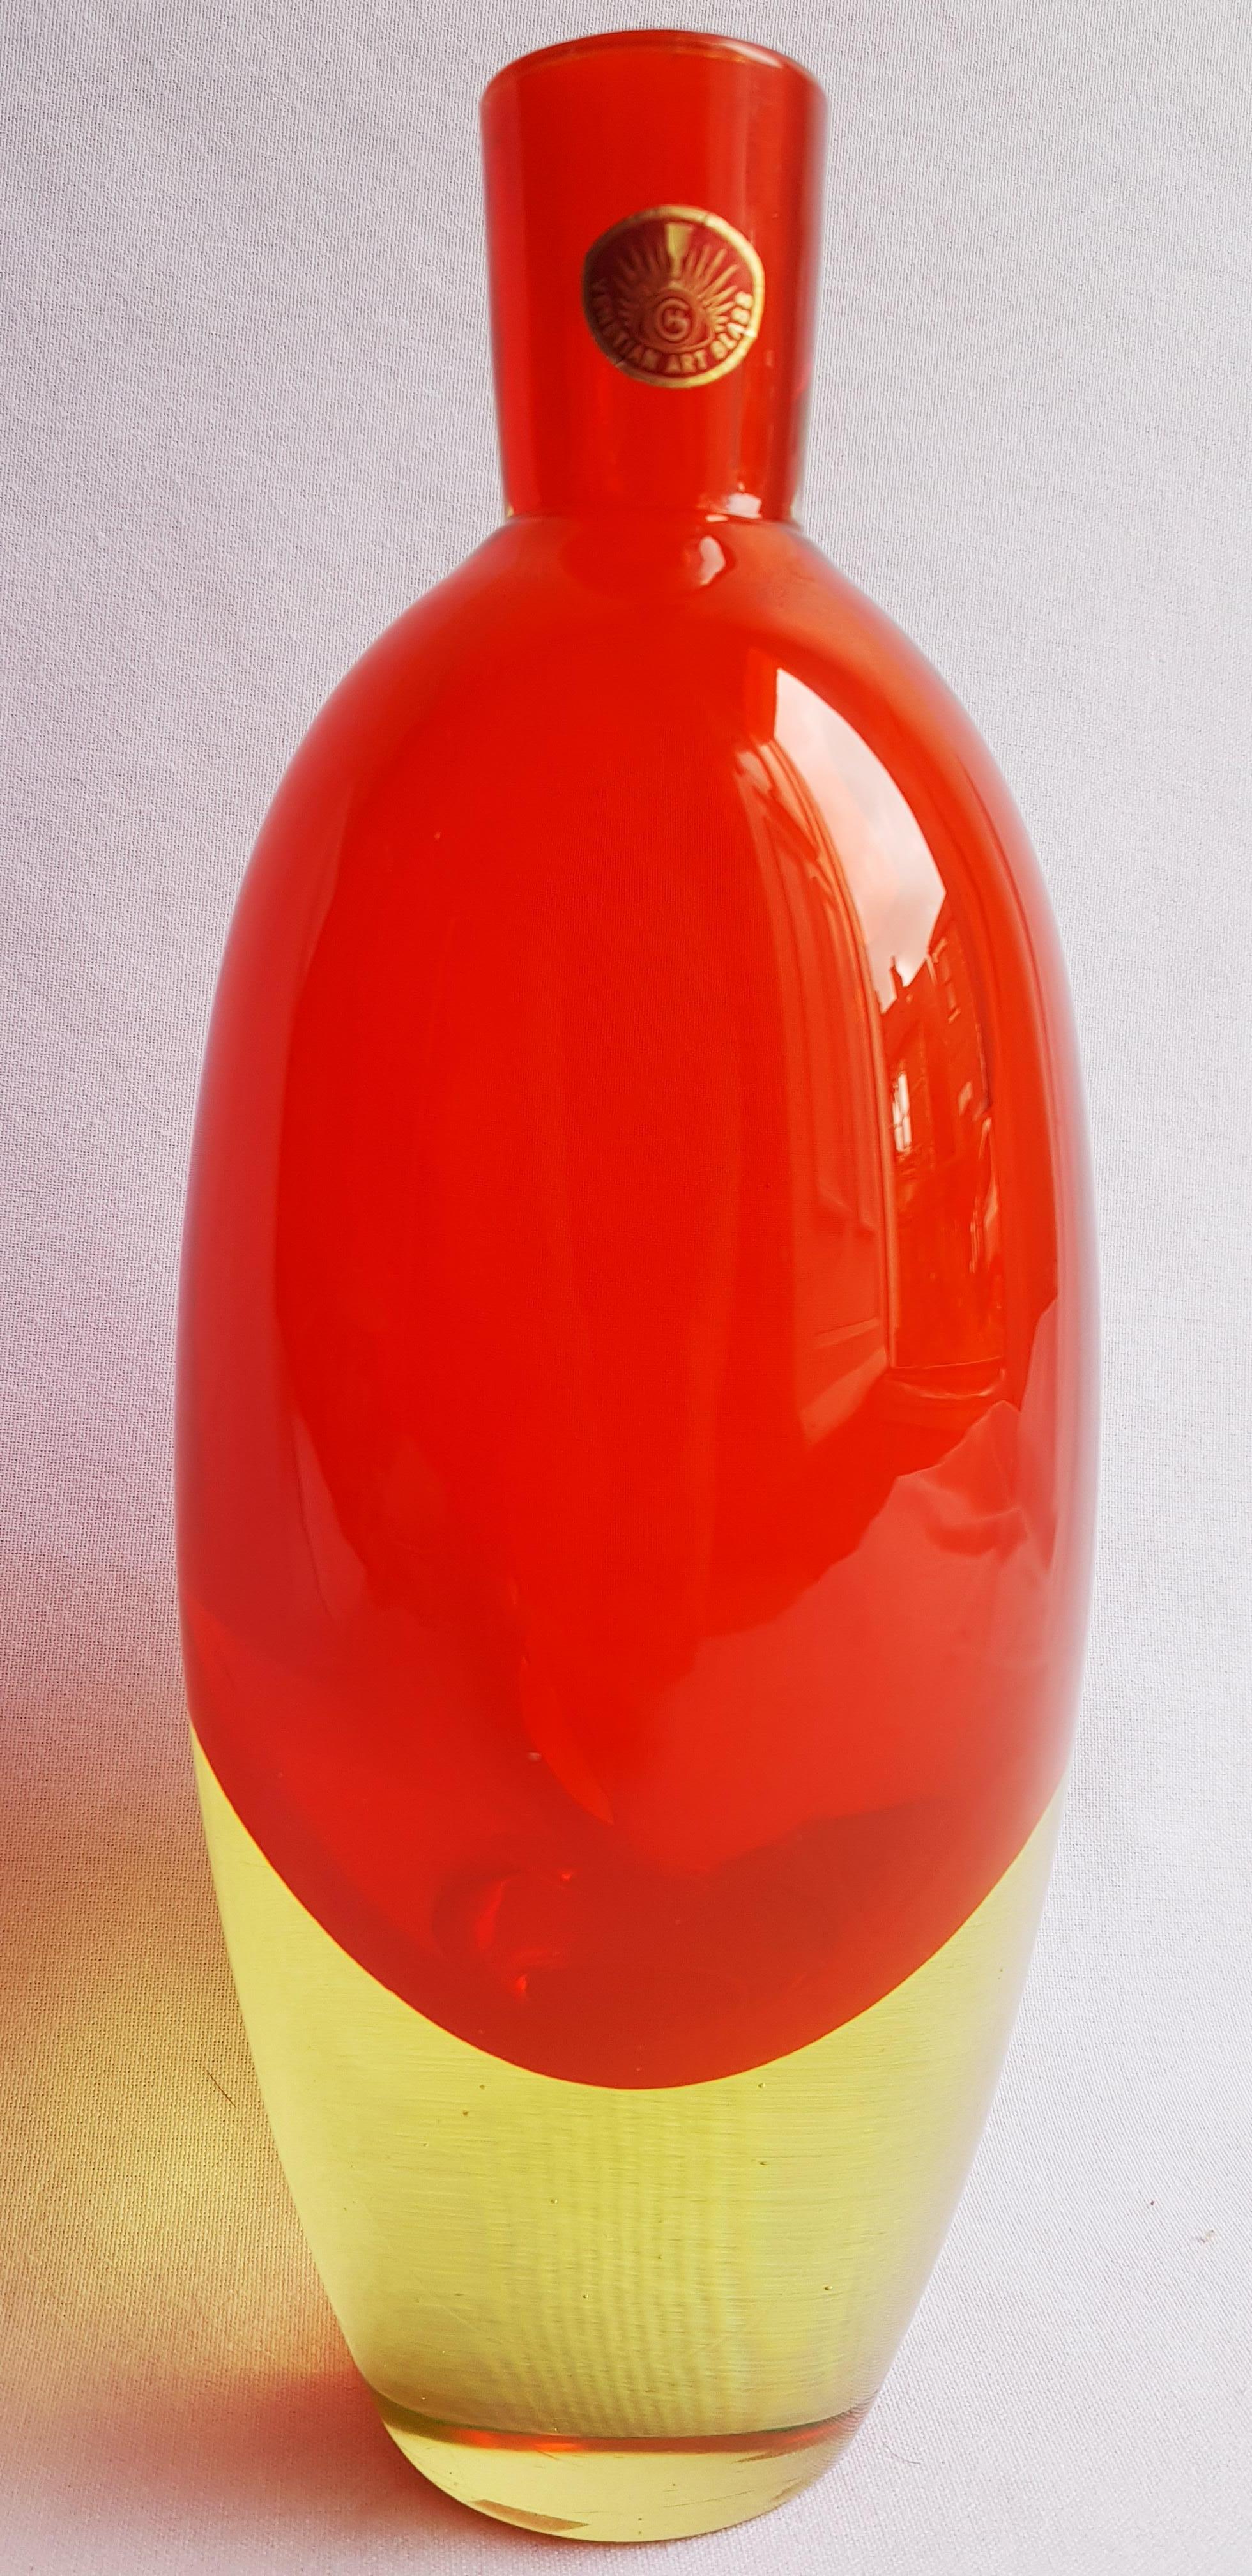 Beautiful middle of century murano glass uranium somerso vase, red and uranium green, by Antonio da Ros for Seguso Seguso vetri D'arte, brilliant condition.